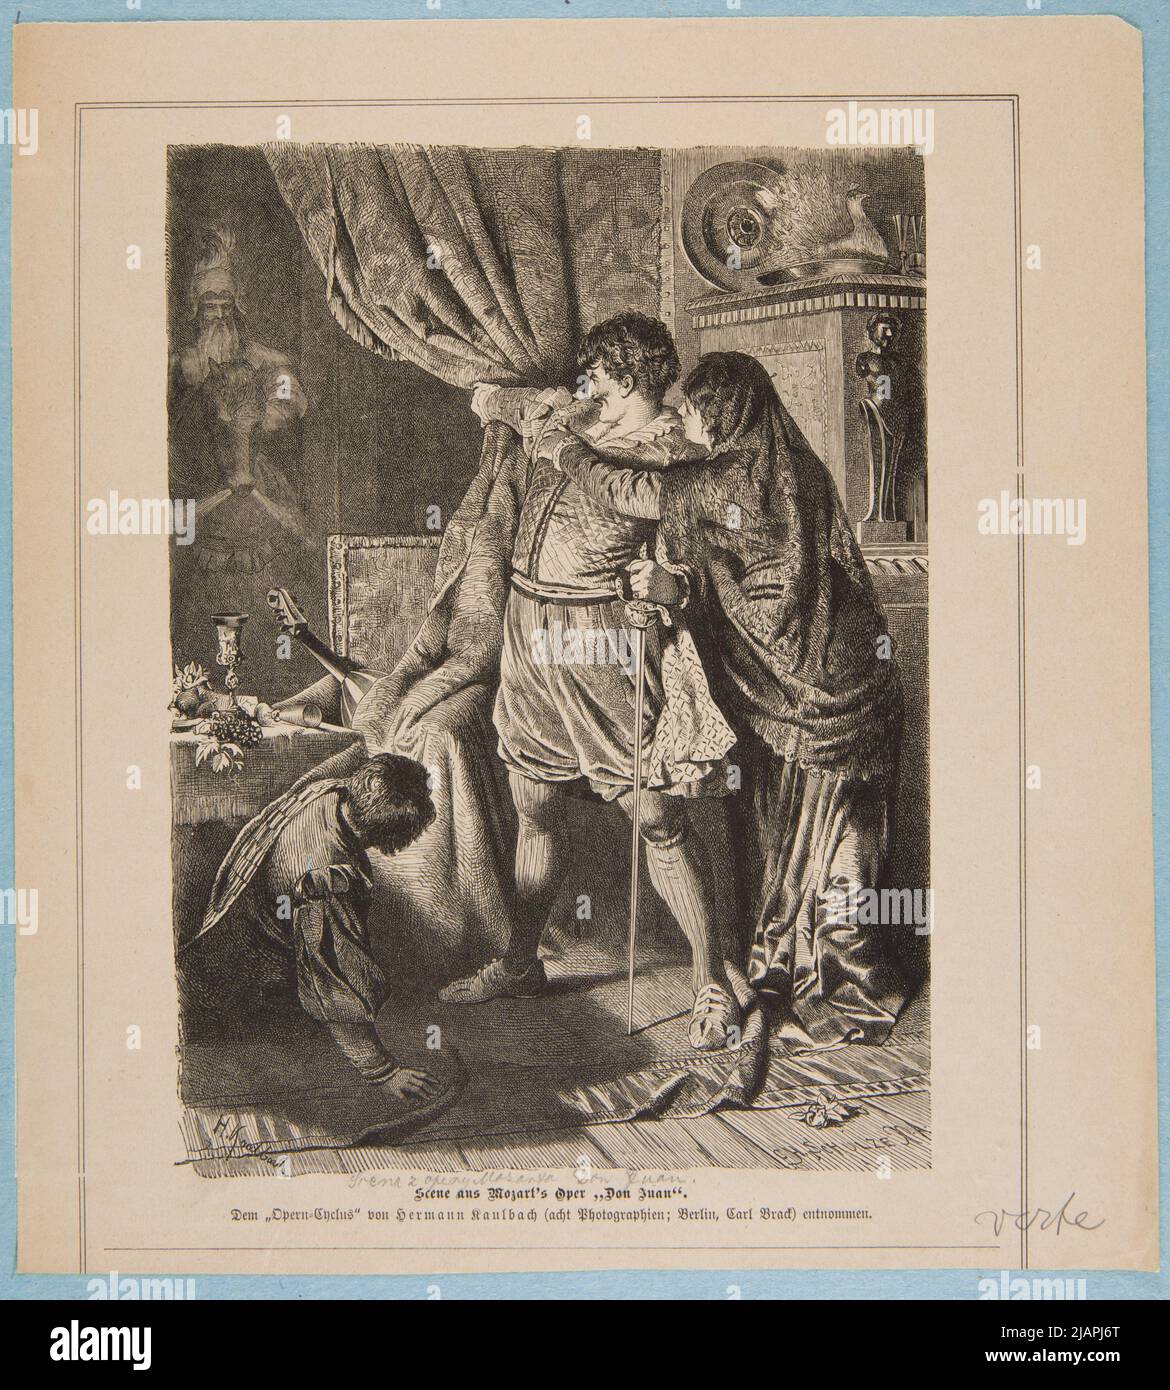 Scena dell'Opera Wolfgang A. Mozart Don Juan secondo Hermann Kaulbach. Una clip di una rivista tedesca. Schulze, C.H. (N.N.), Kaulbach, Hermann von (1846 1909) Foto Stock